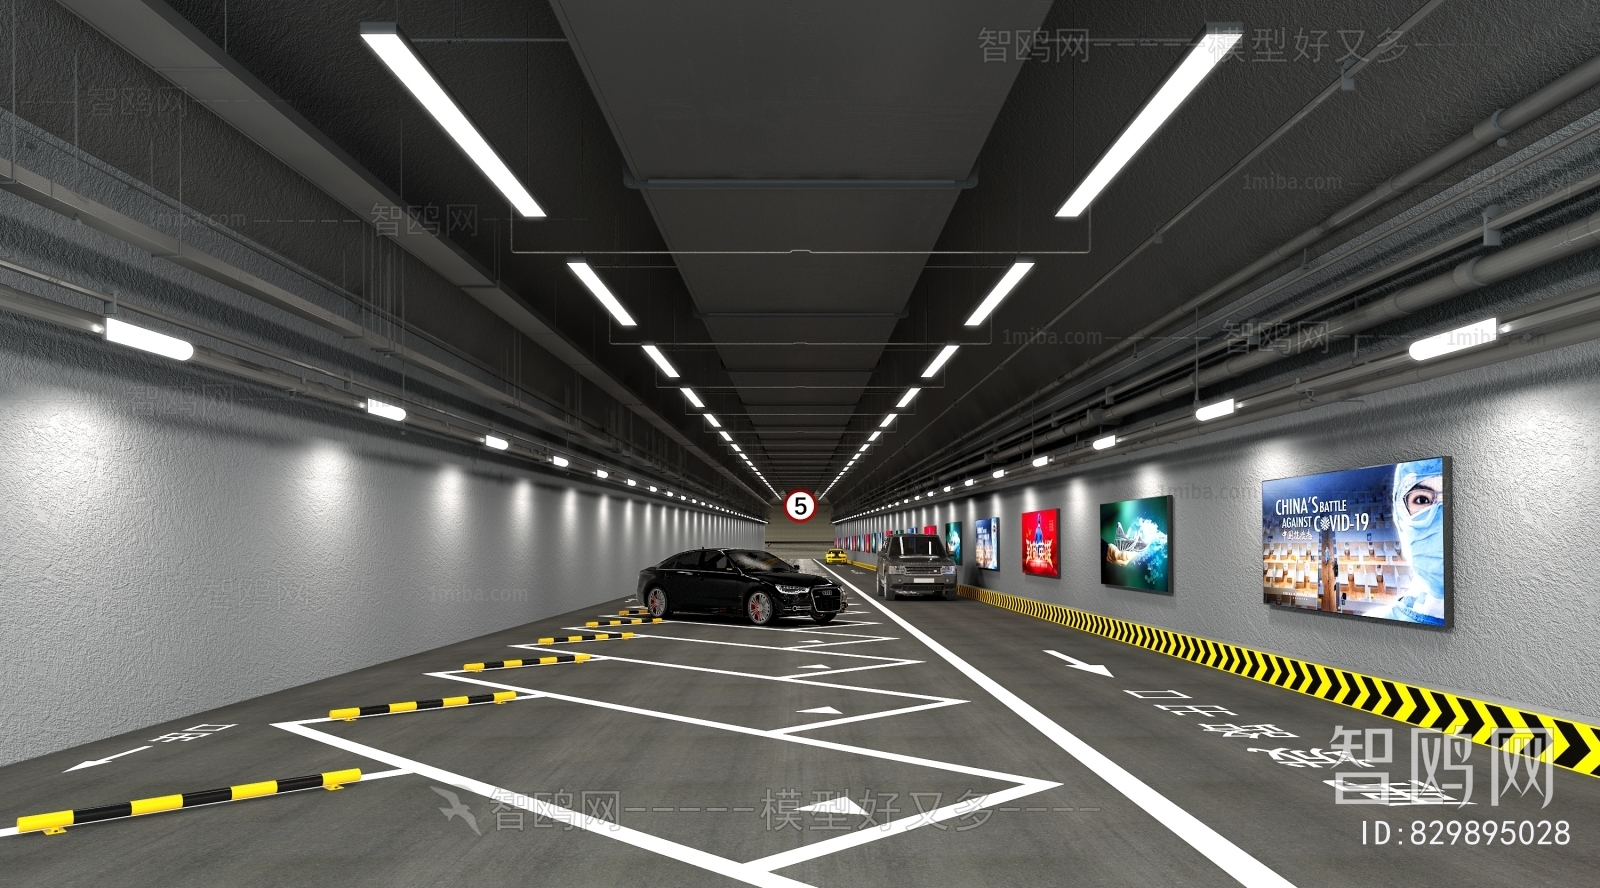 Industrial Style Underground Parking Lot